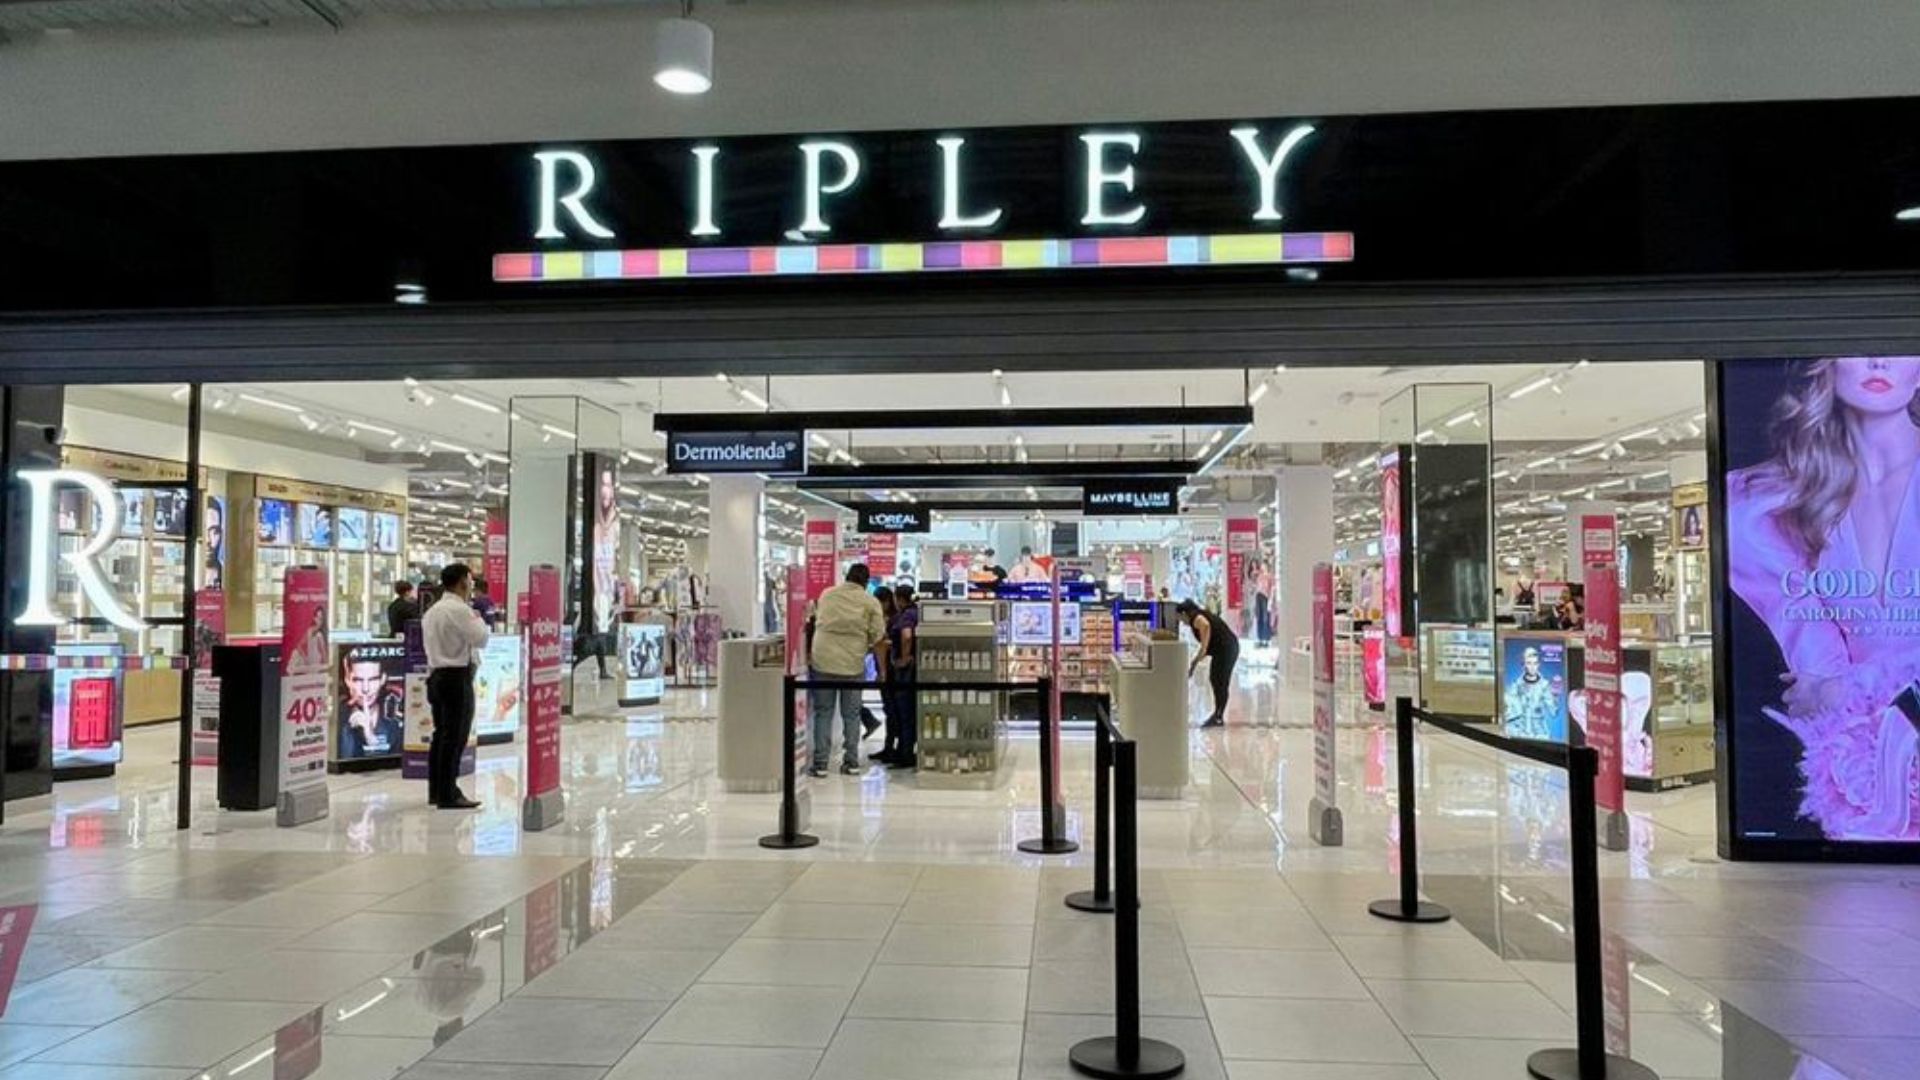 Ripley - Tienda Departamental in Peru